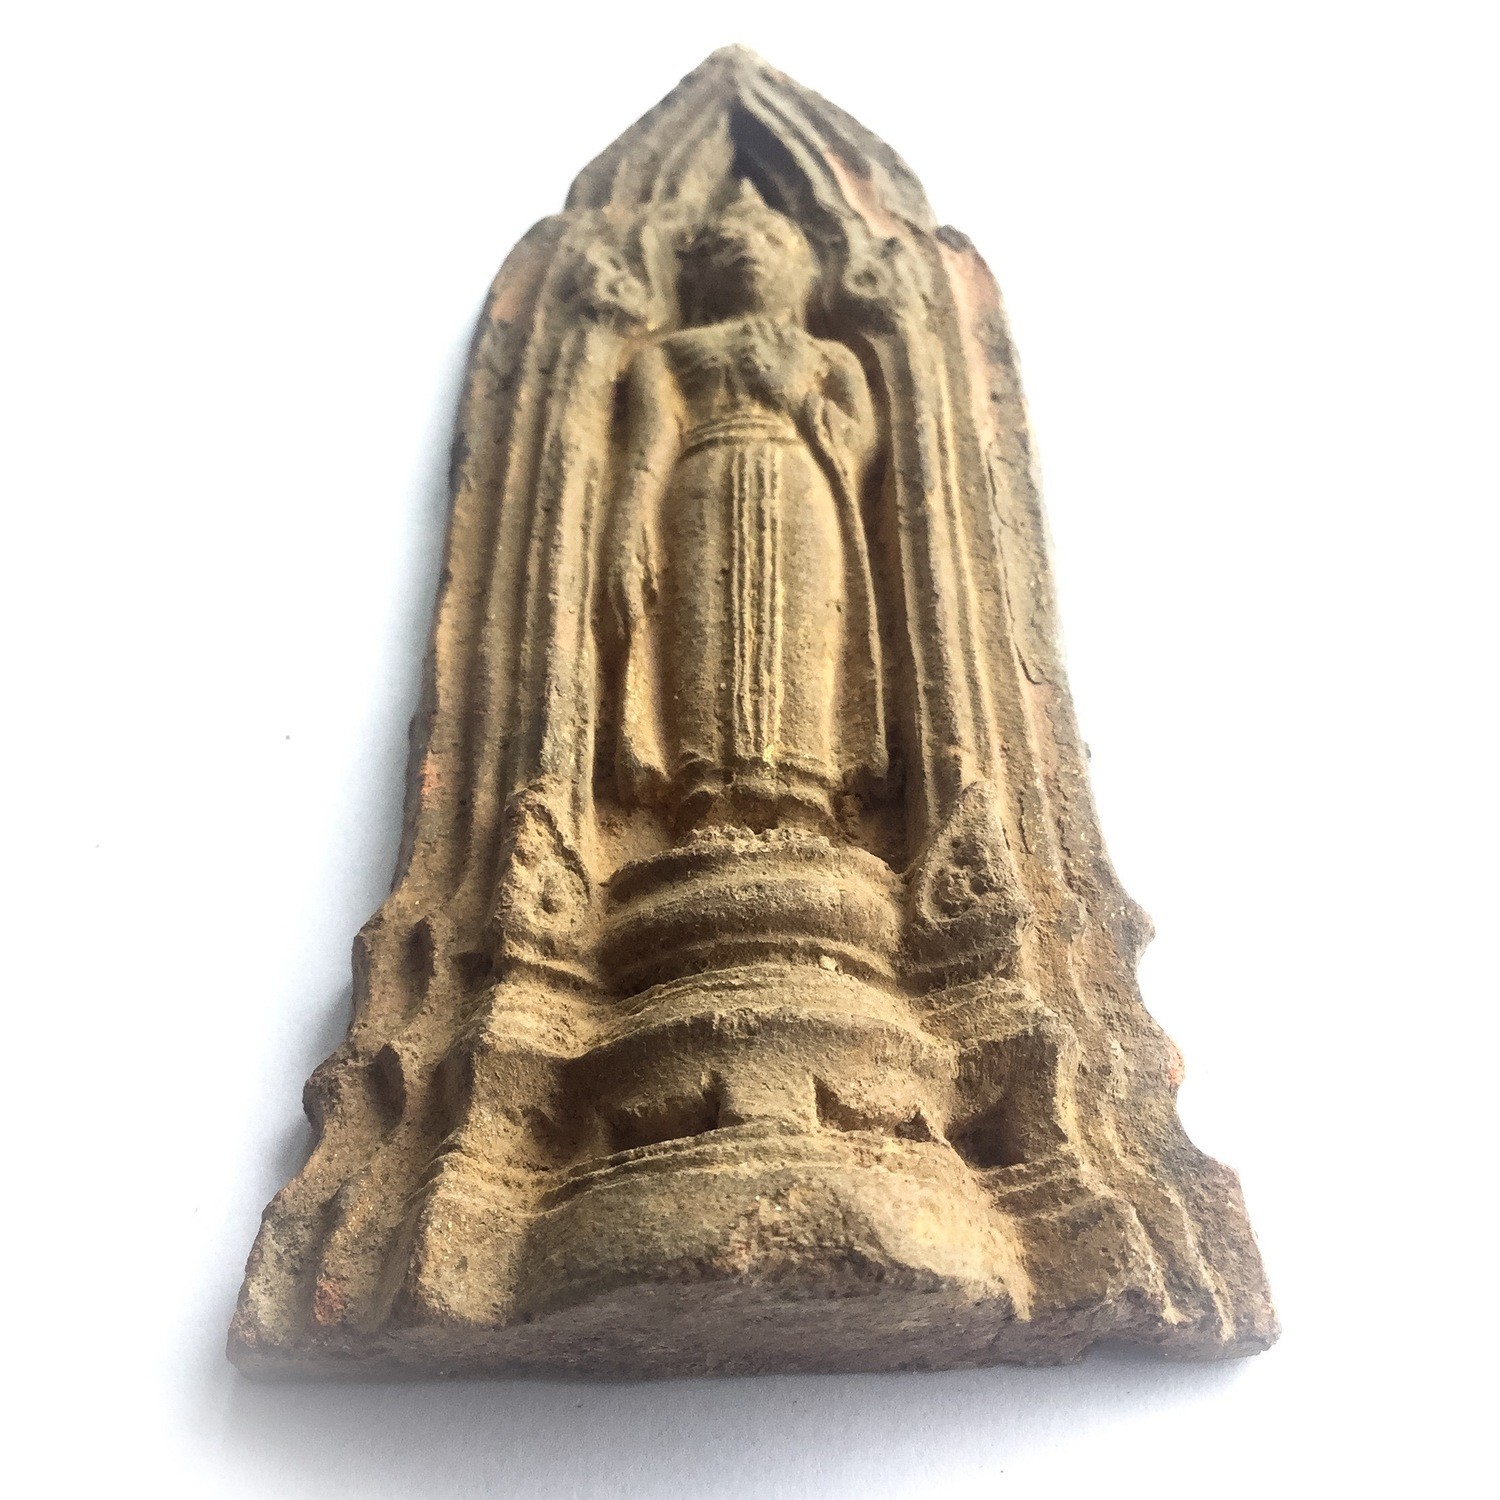 Pra Kru Kone Samor Pim Ham Yati - Over 200 Year Old Ayuttaya Period Clay Buddha Amulet from 2430 BE Royal Palace Hiding Place Find